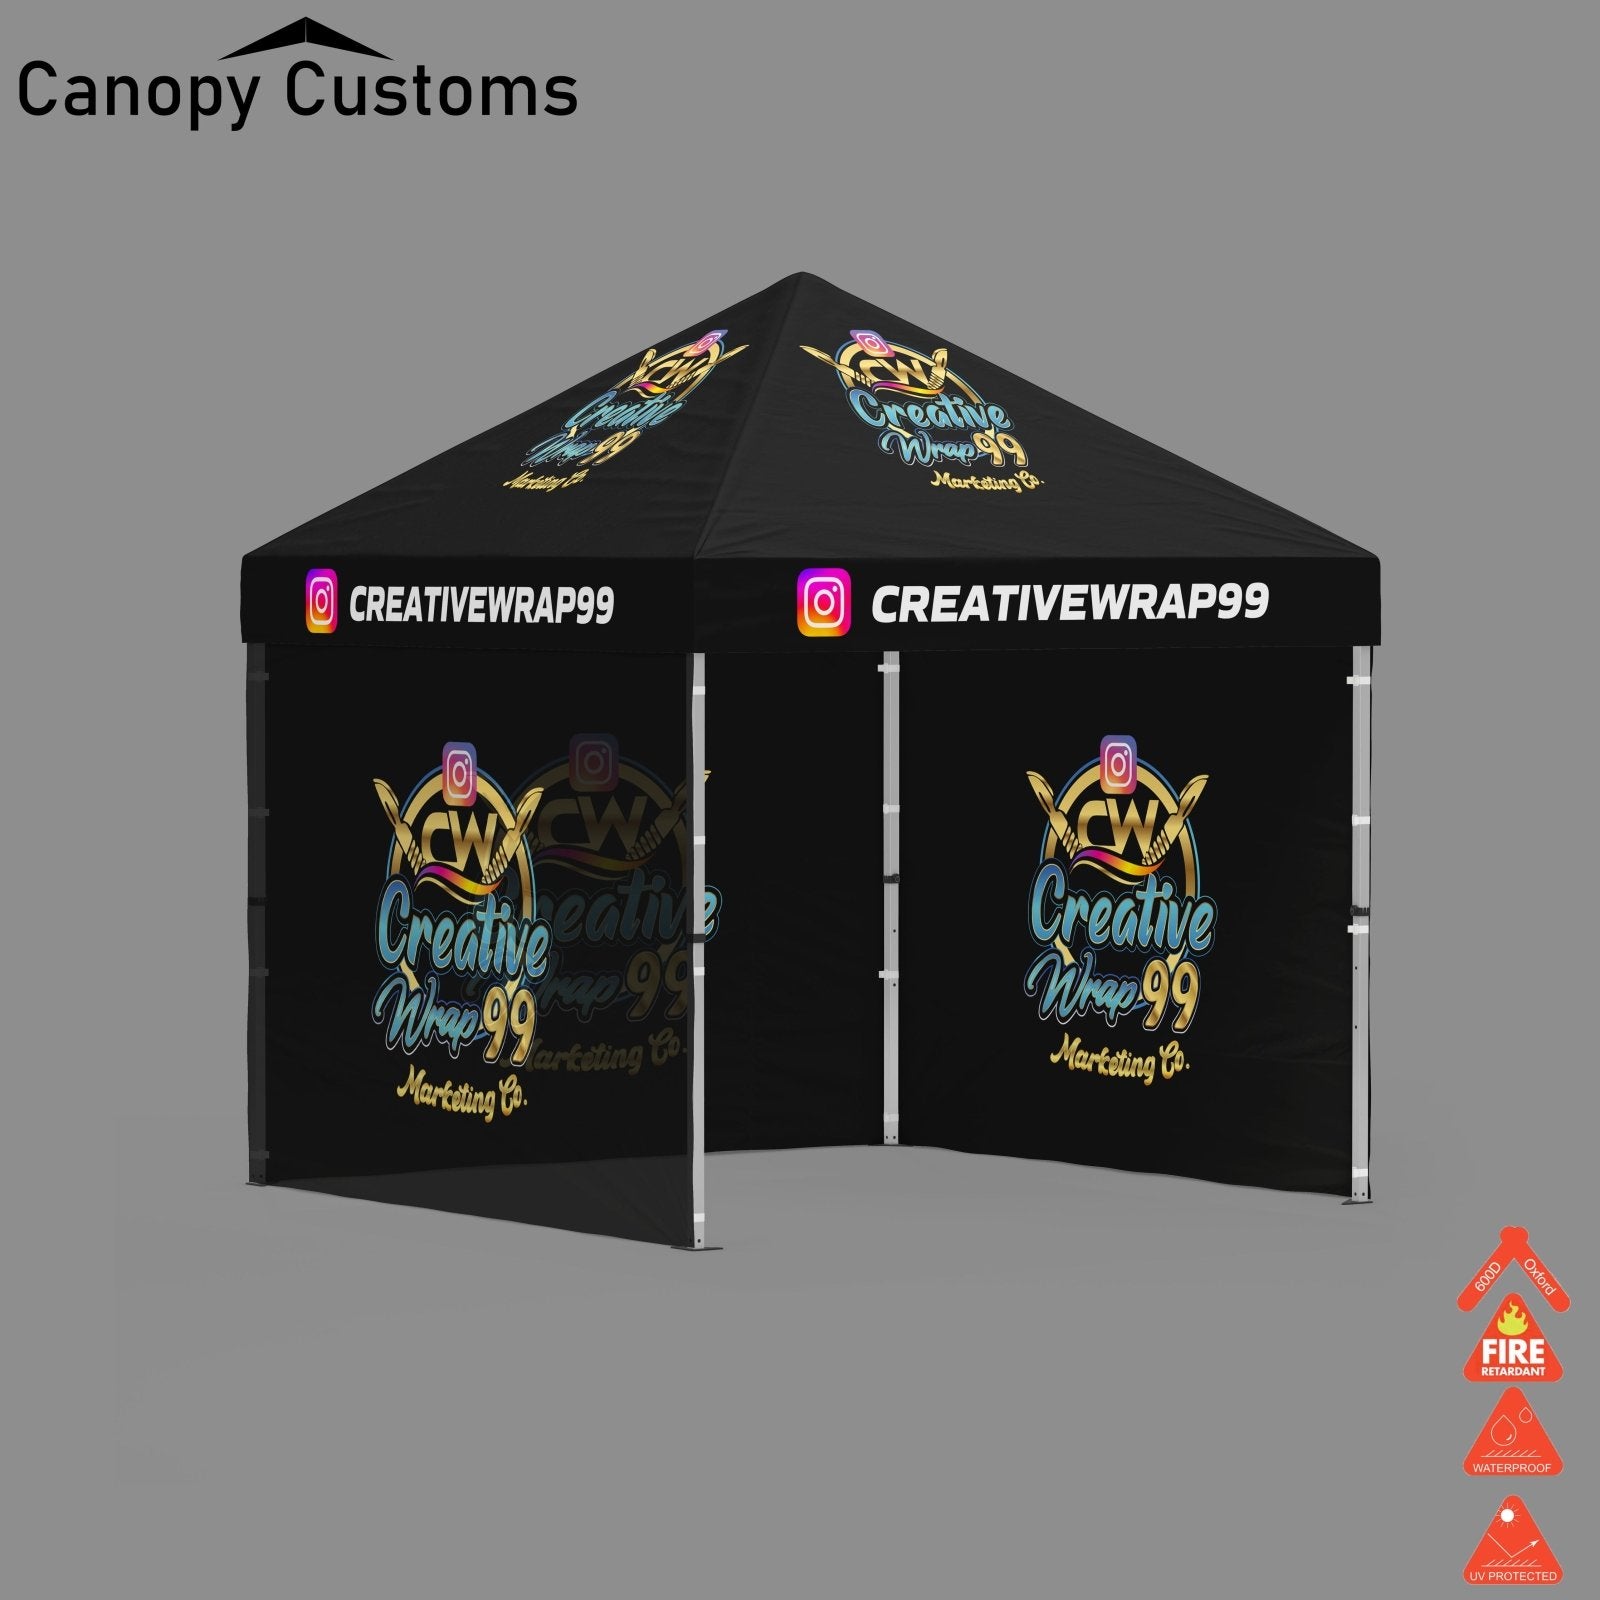 Full Custom Canopy - Canopy Customs